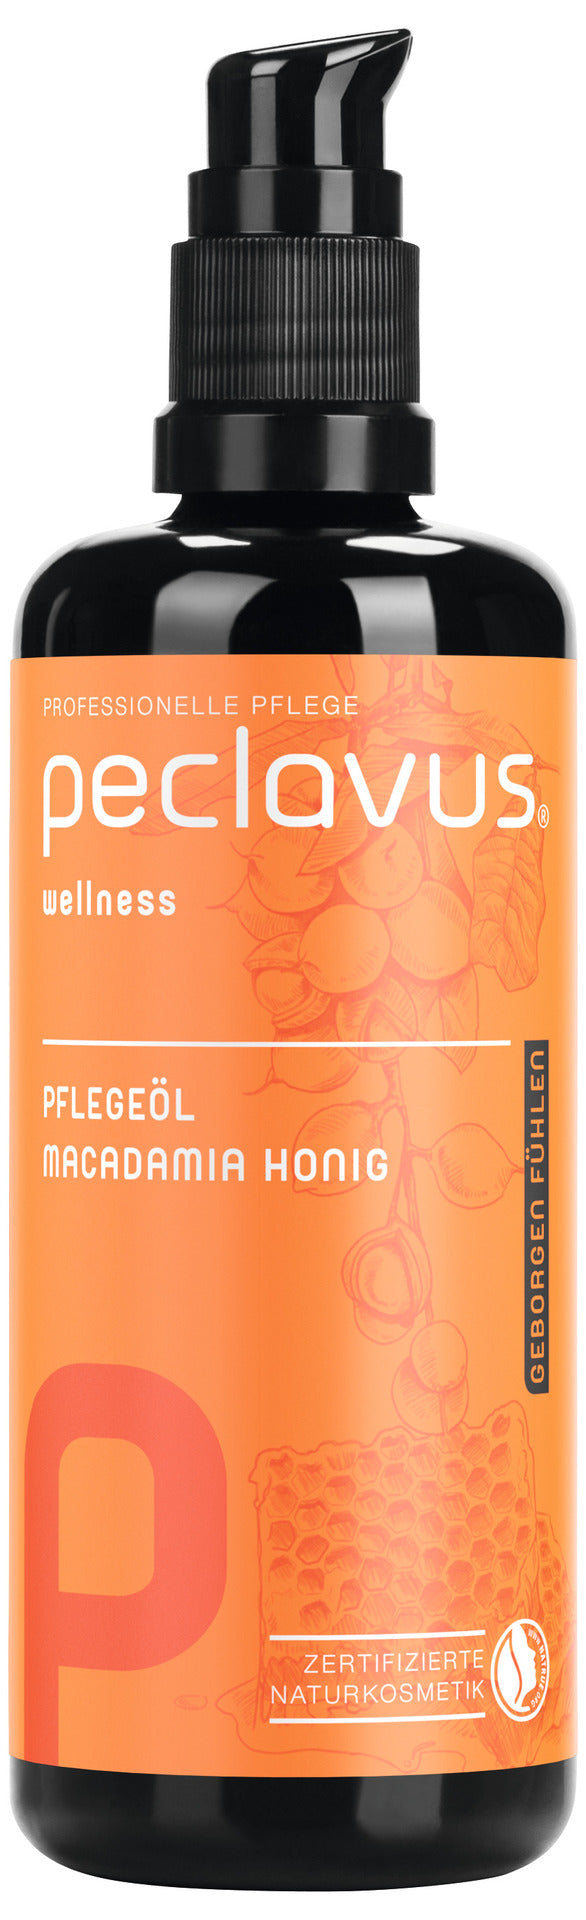 Huile de soin - Miel de Macadamia - Peclavus